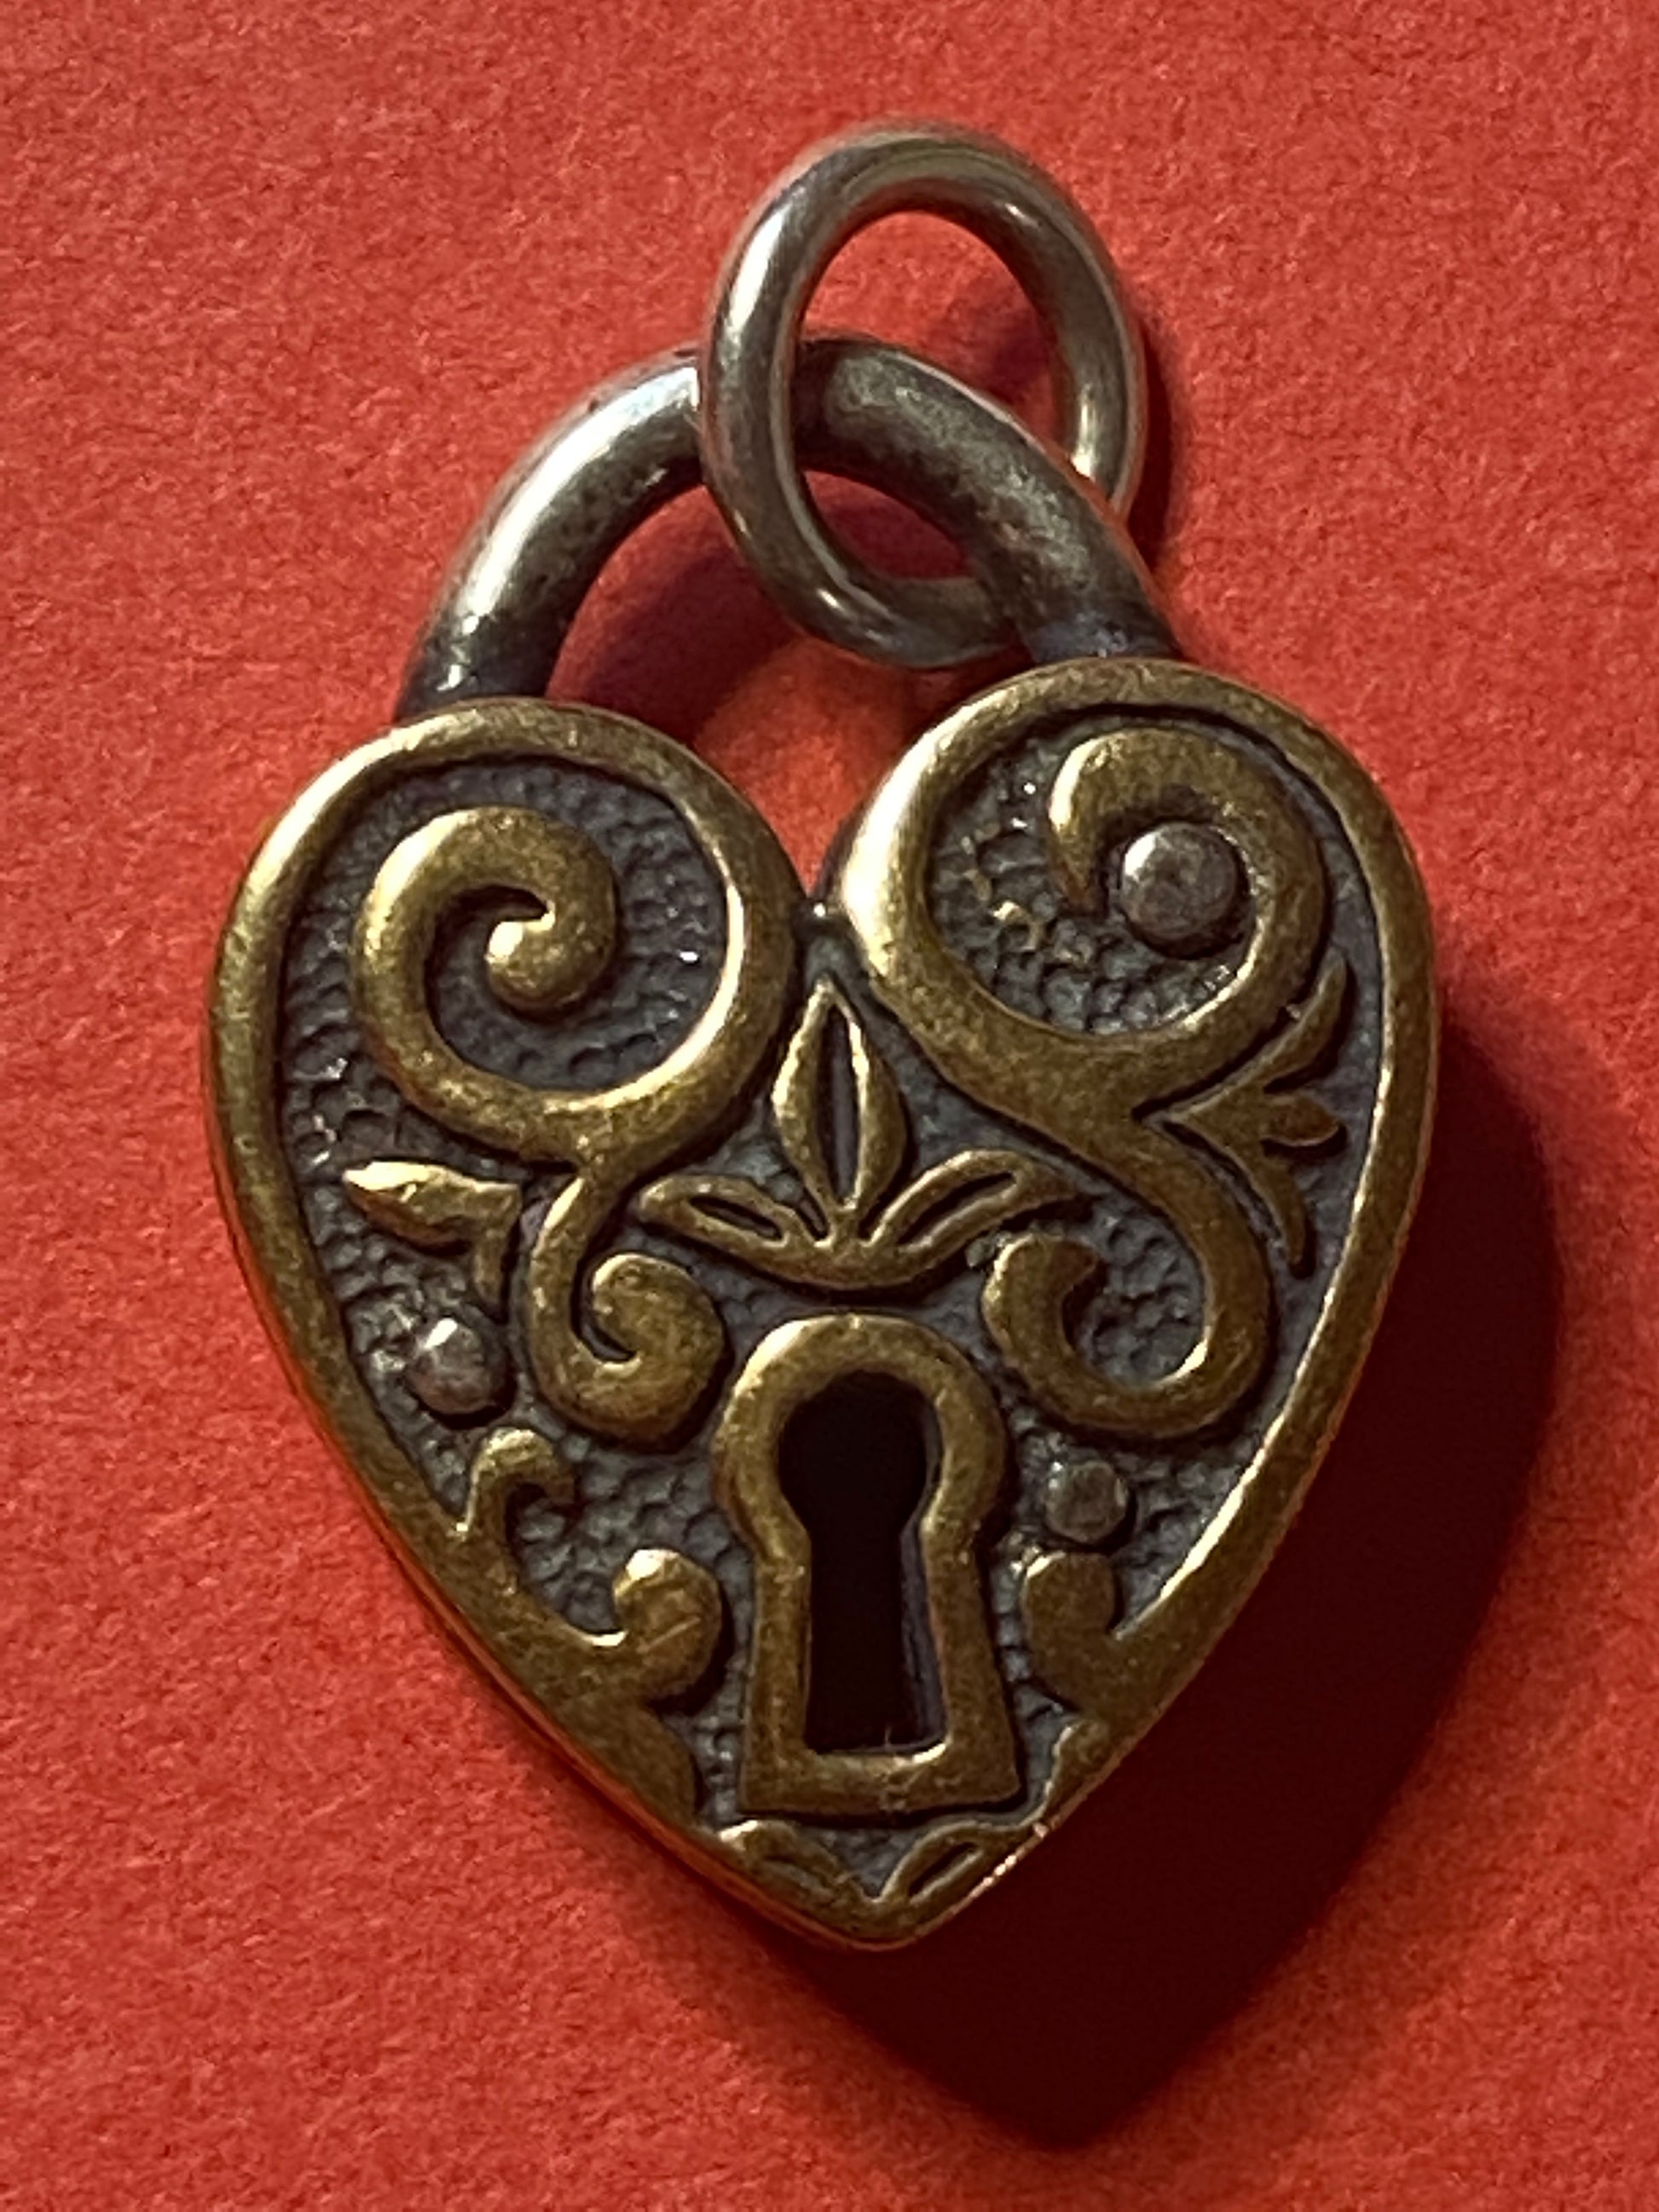 Loving Heart - Prestige Charm Bracelet